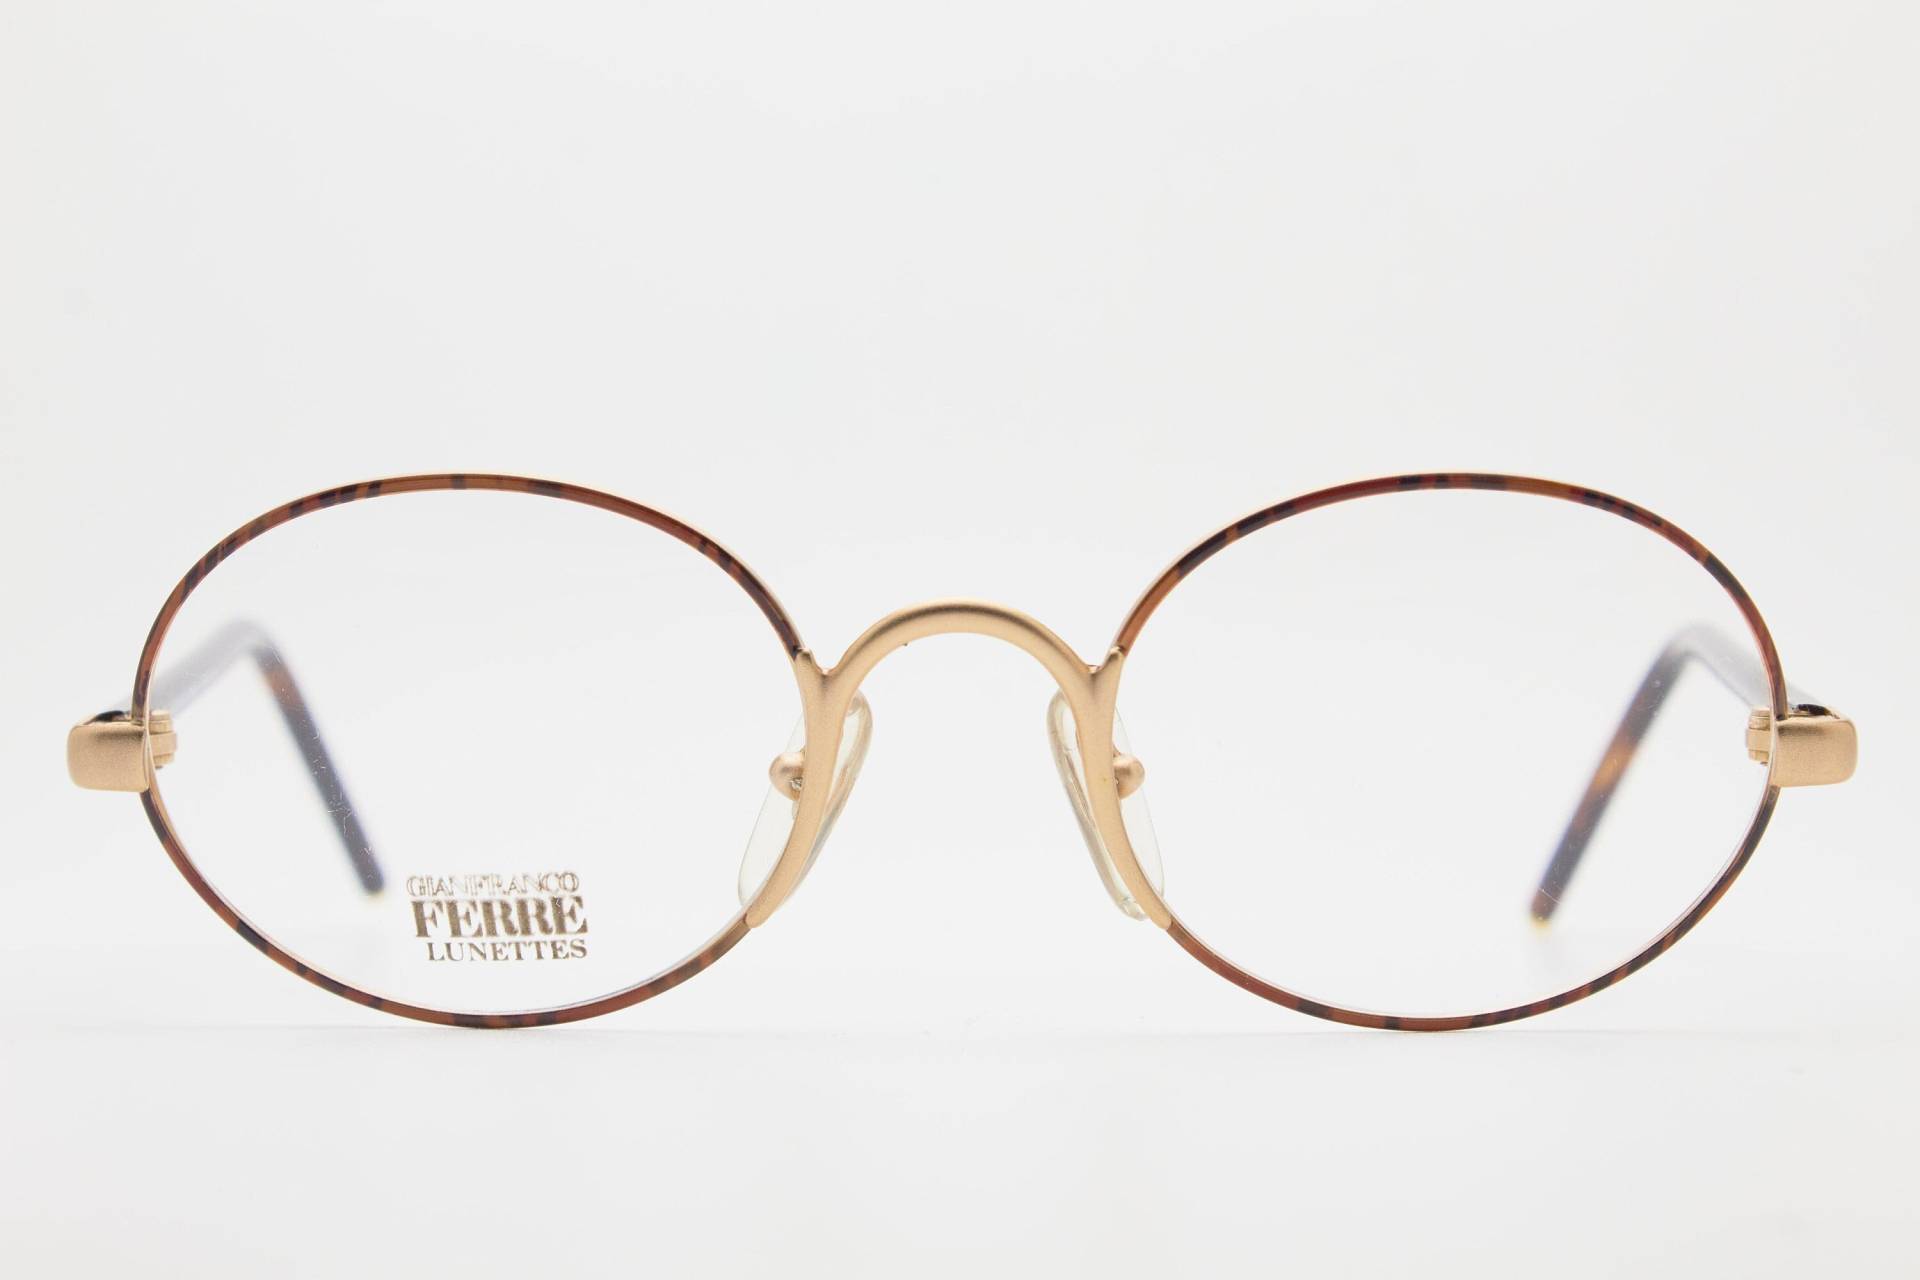 Gianfranco Ferre Gff177 Braun Gold Ovale Fassung/Goldene Brillen/Ovale Brillen/Vintage Brillen/1980Er Sonnenbrillen/Ovale Brillen 1980Er Jahre von VintageGlassesVault